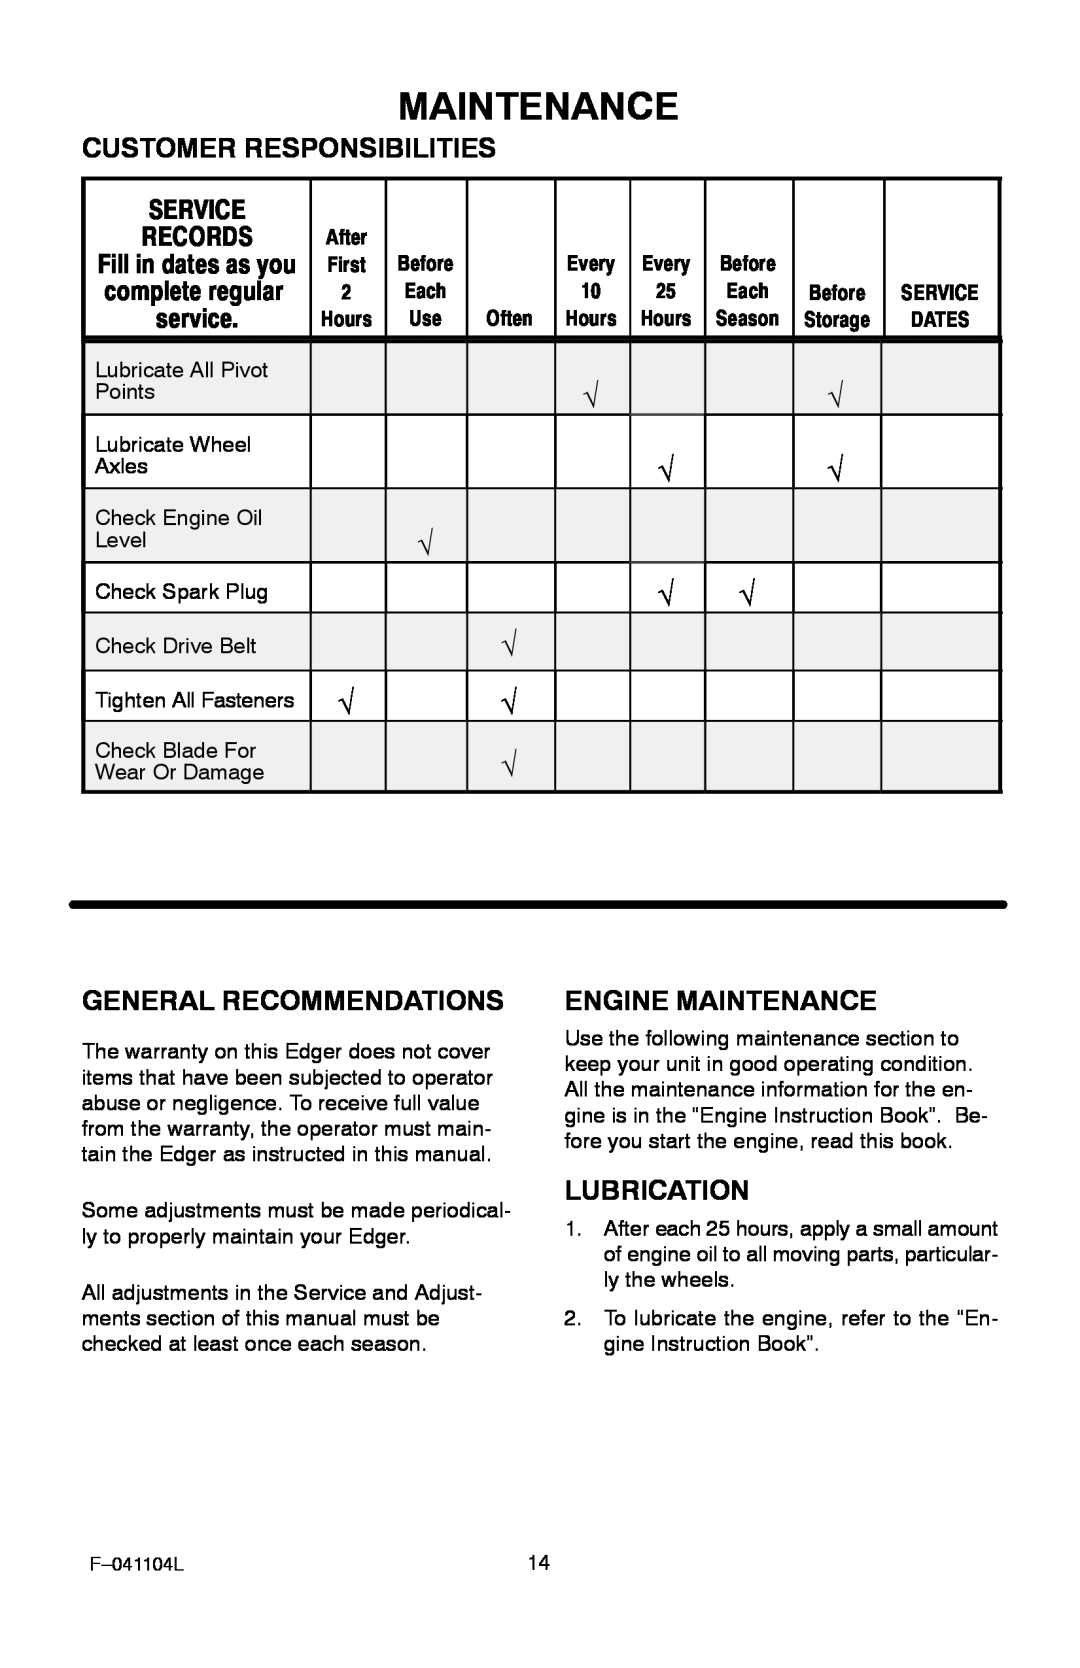 Murray EV3850x4B 3.8 Customer Responsibilities, General Recommendations, Engine Maintenance, Lubrication 